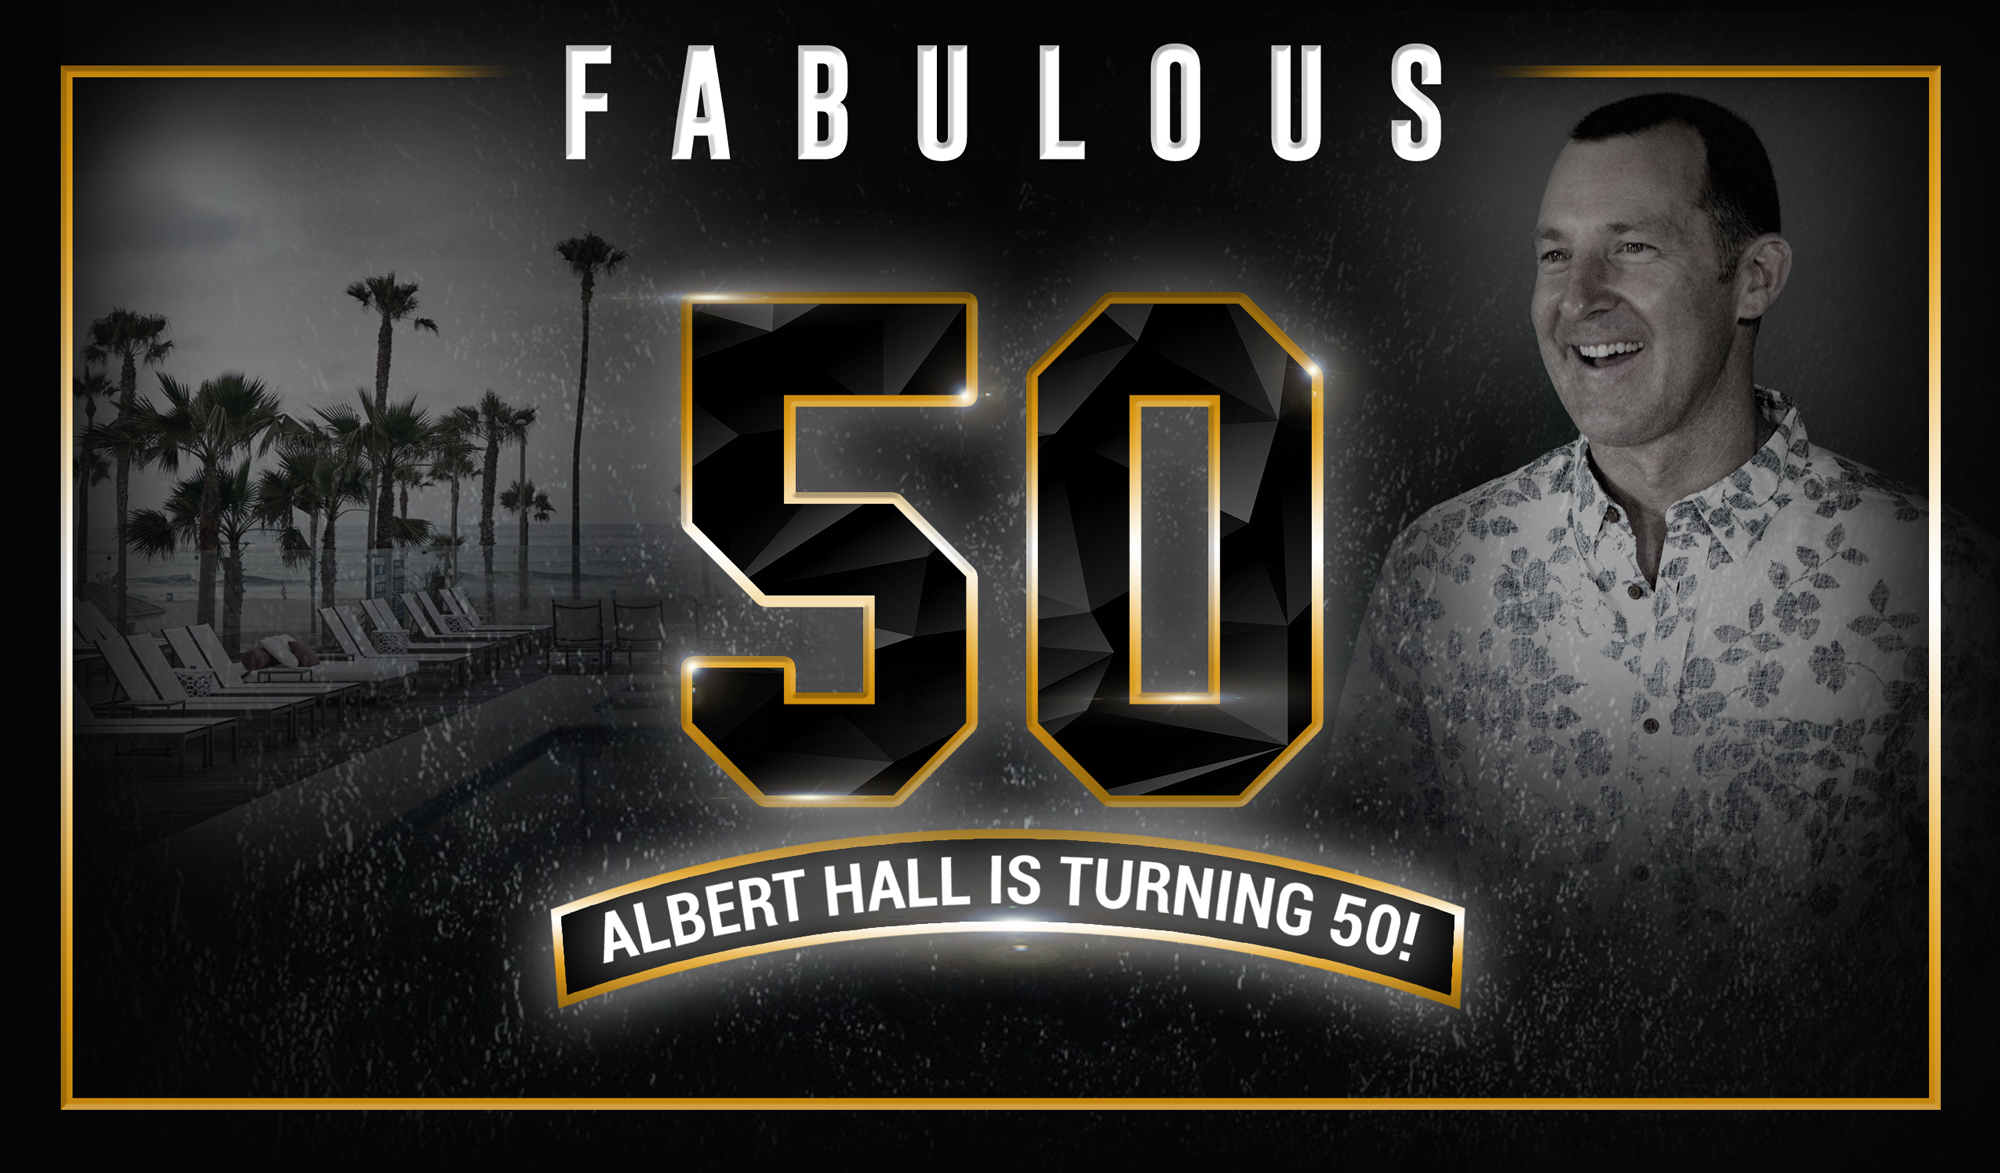 Albert is Turning 50